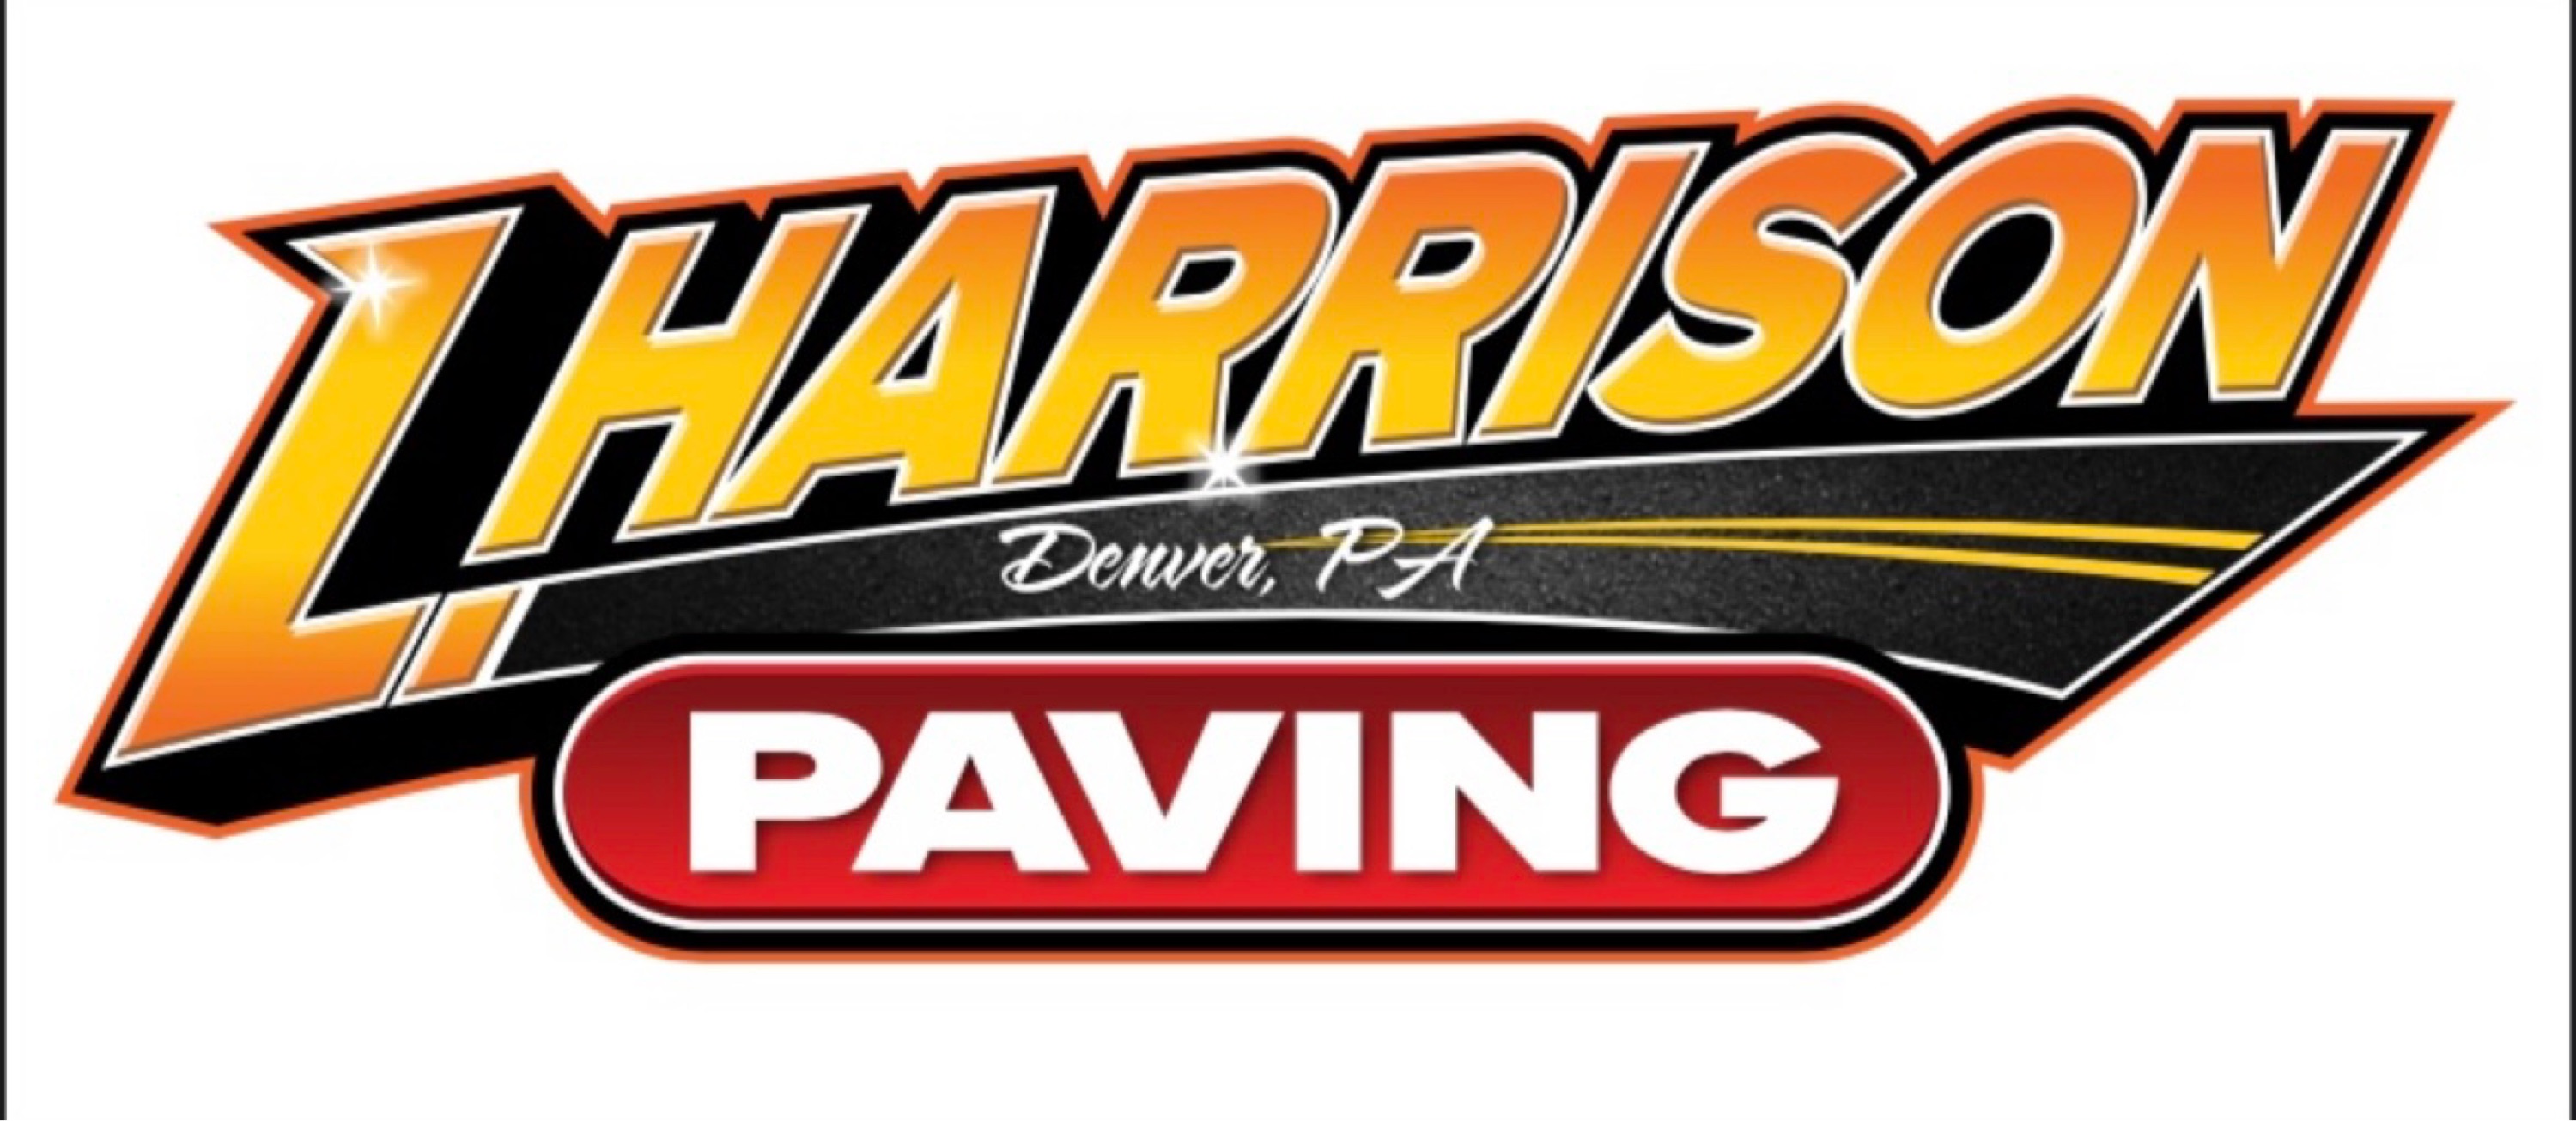 L Harrison Paving LLC Logo